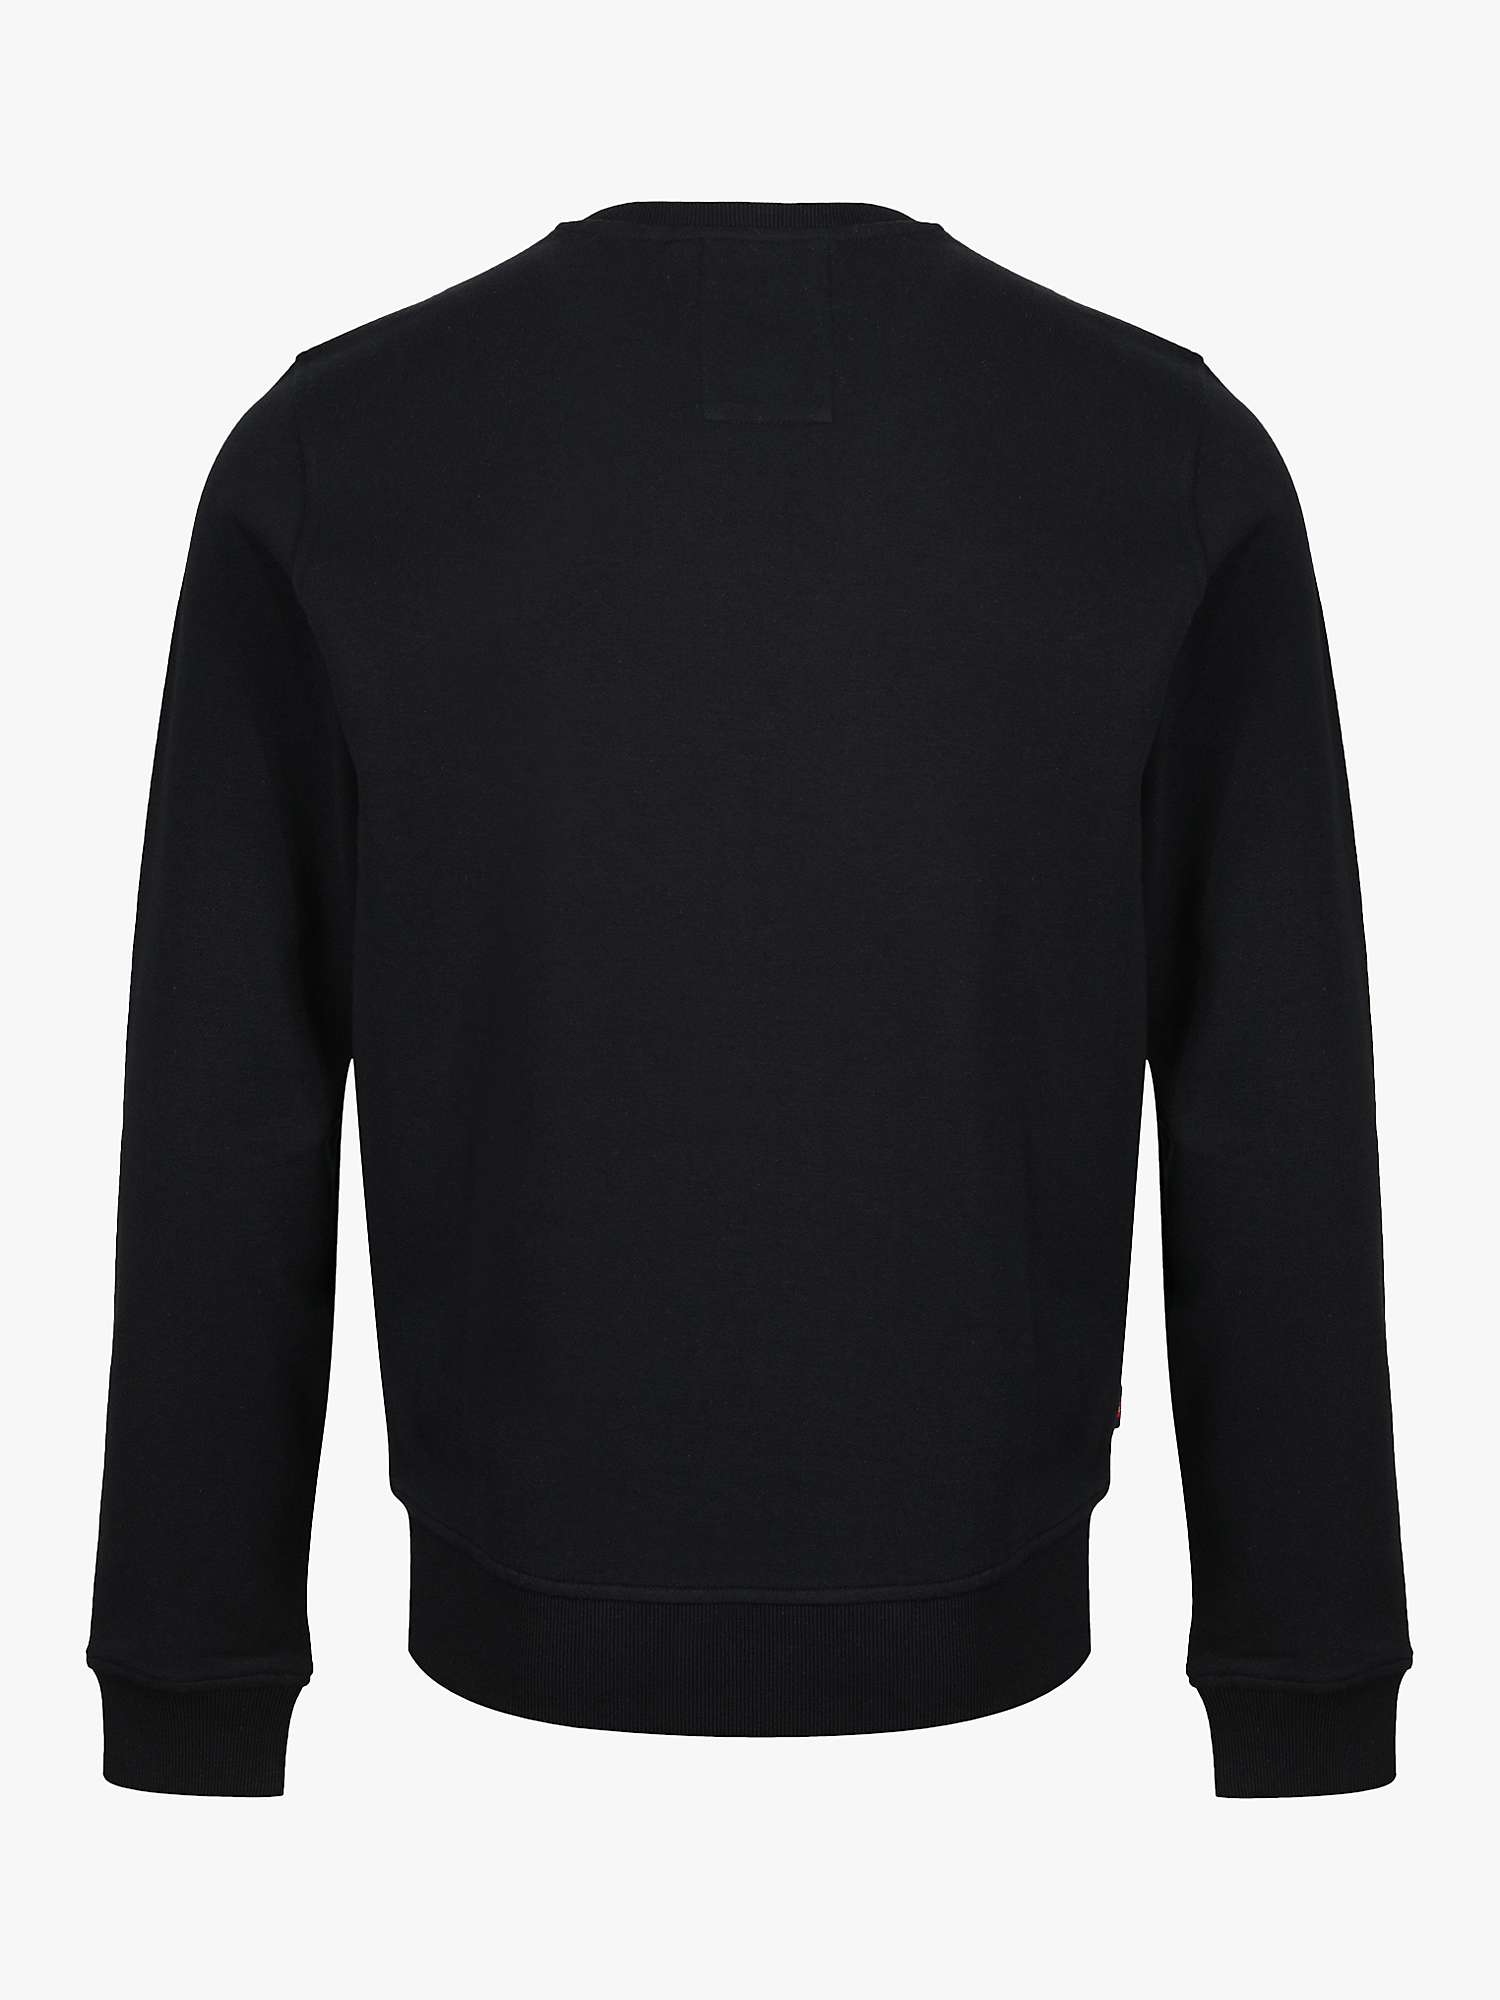 Buy LUKE 1977 Extatic Sweatshirt, Black Online at johnlewis.com